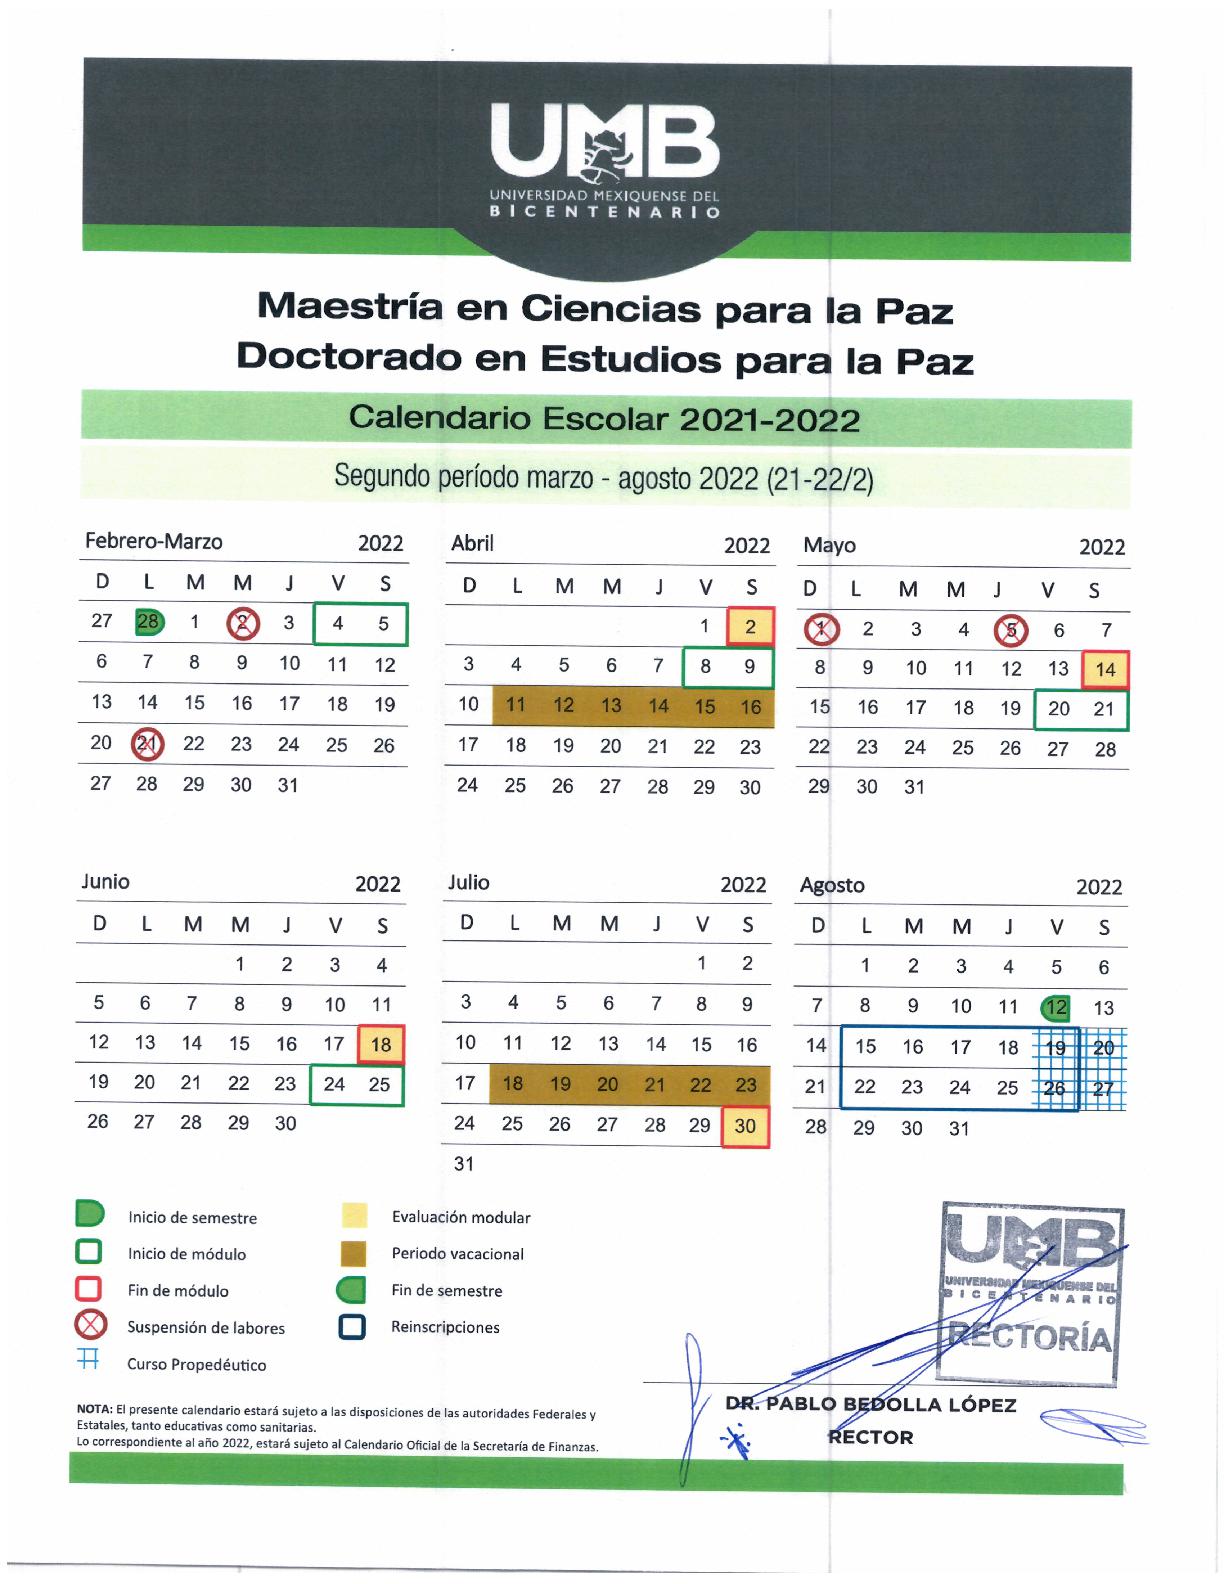 Calendario Escolar Universidad Mexiquense del Bicentenario